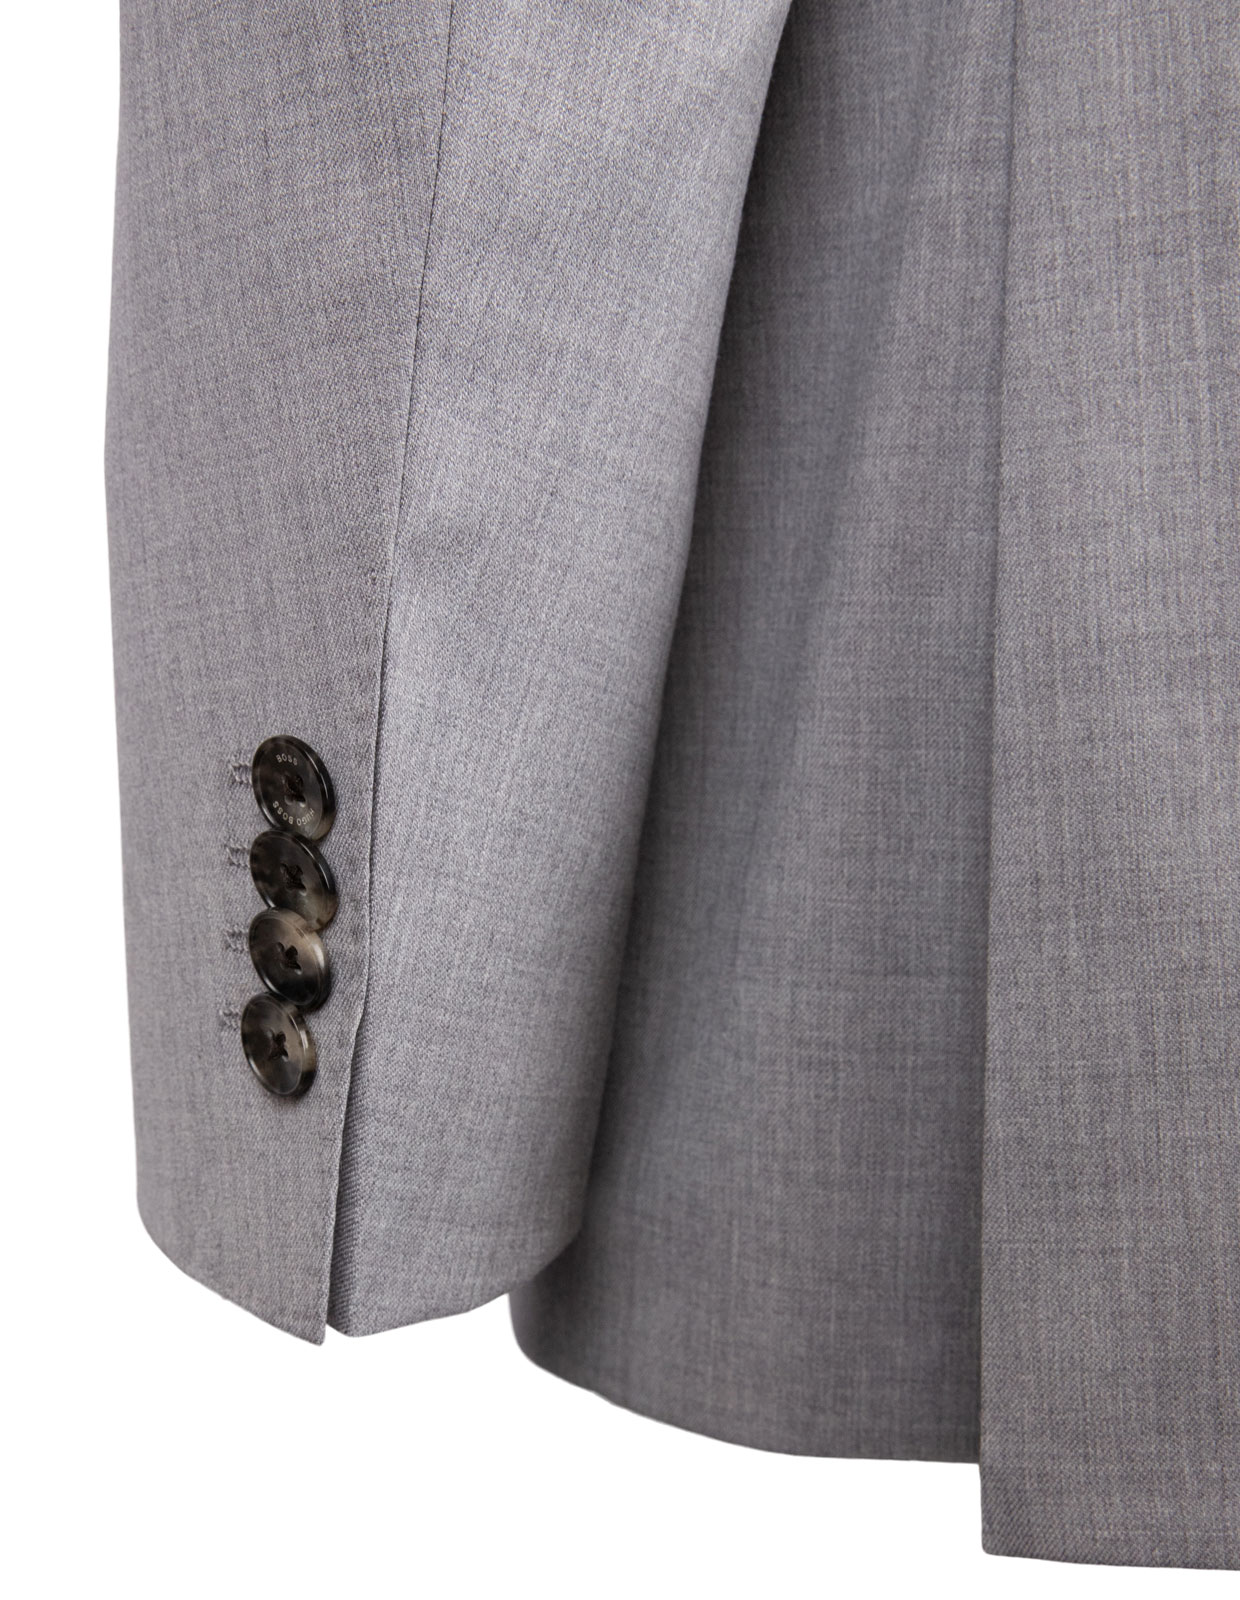 Jeckson Lenon Wool Suit Solid Medium Grey